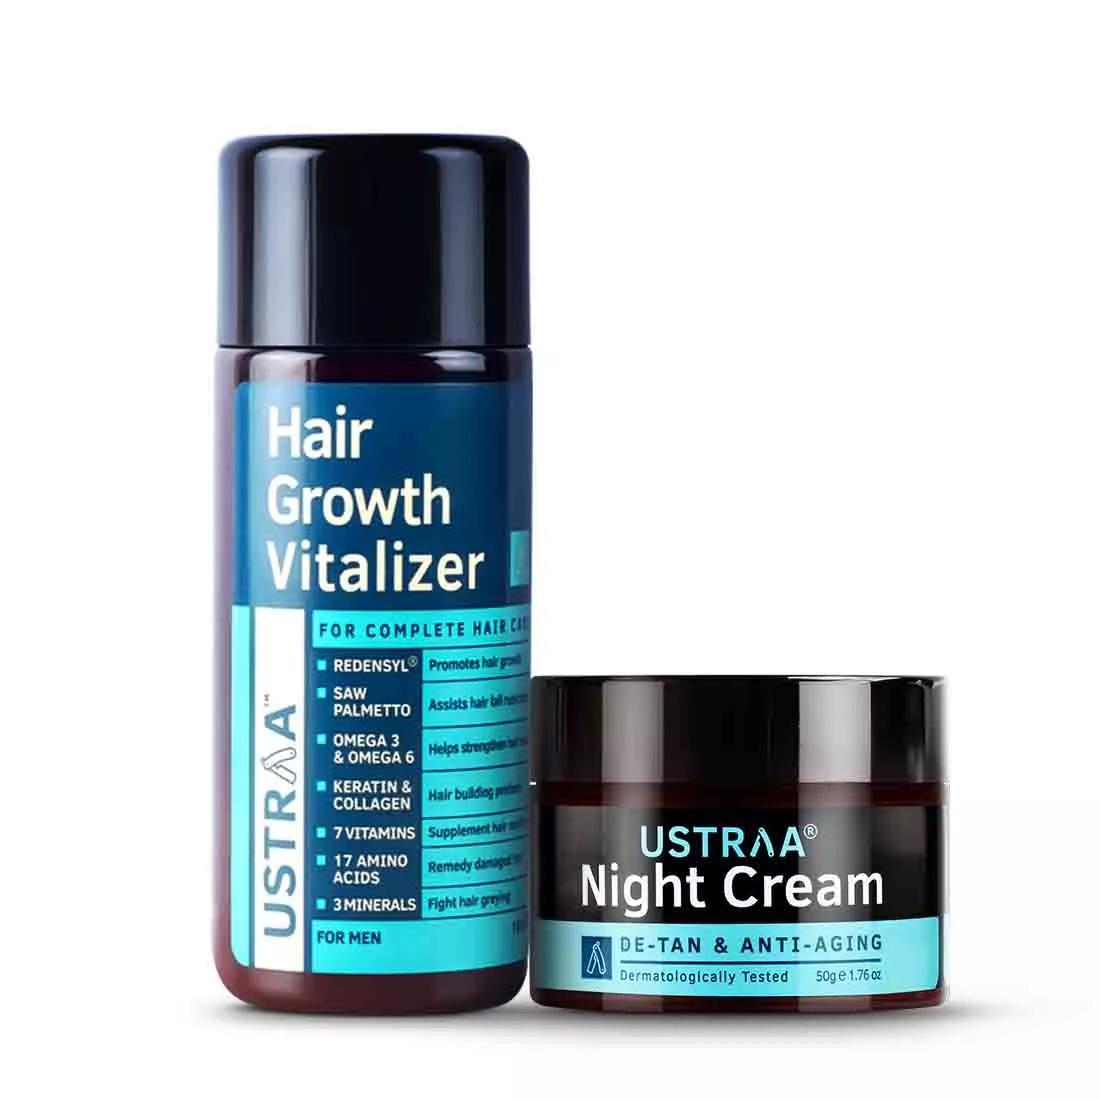 Hair Growth Vitalizer and Night Cream- De-Tan & Anti-Aging